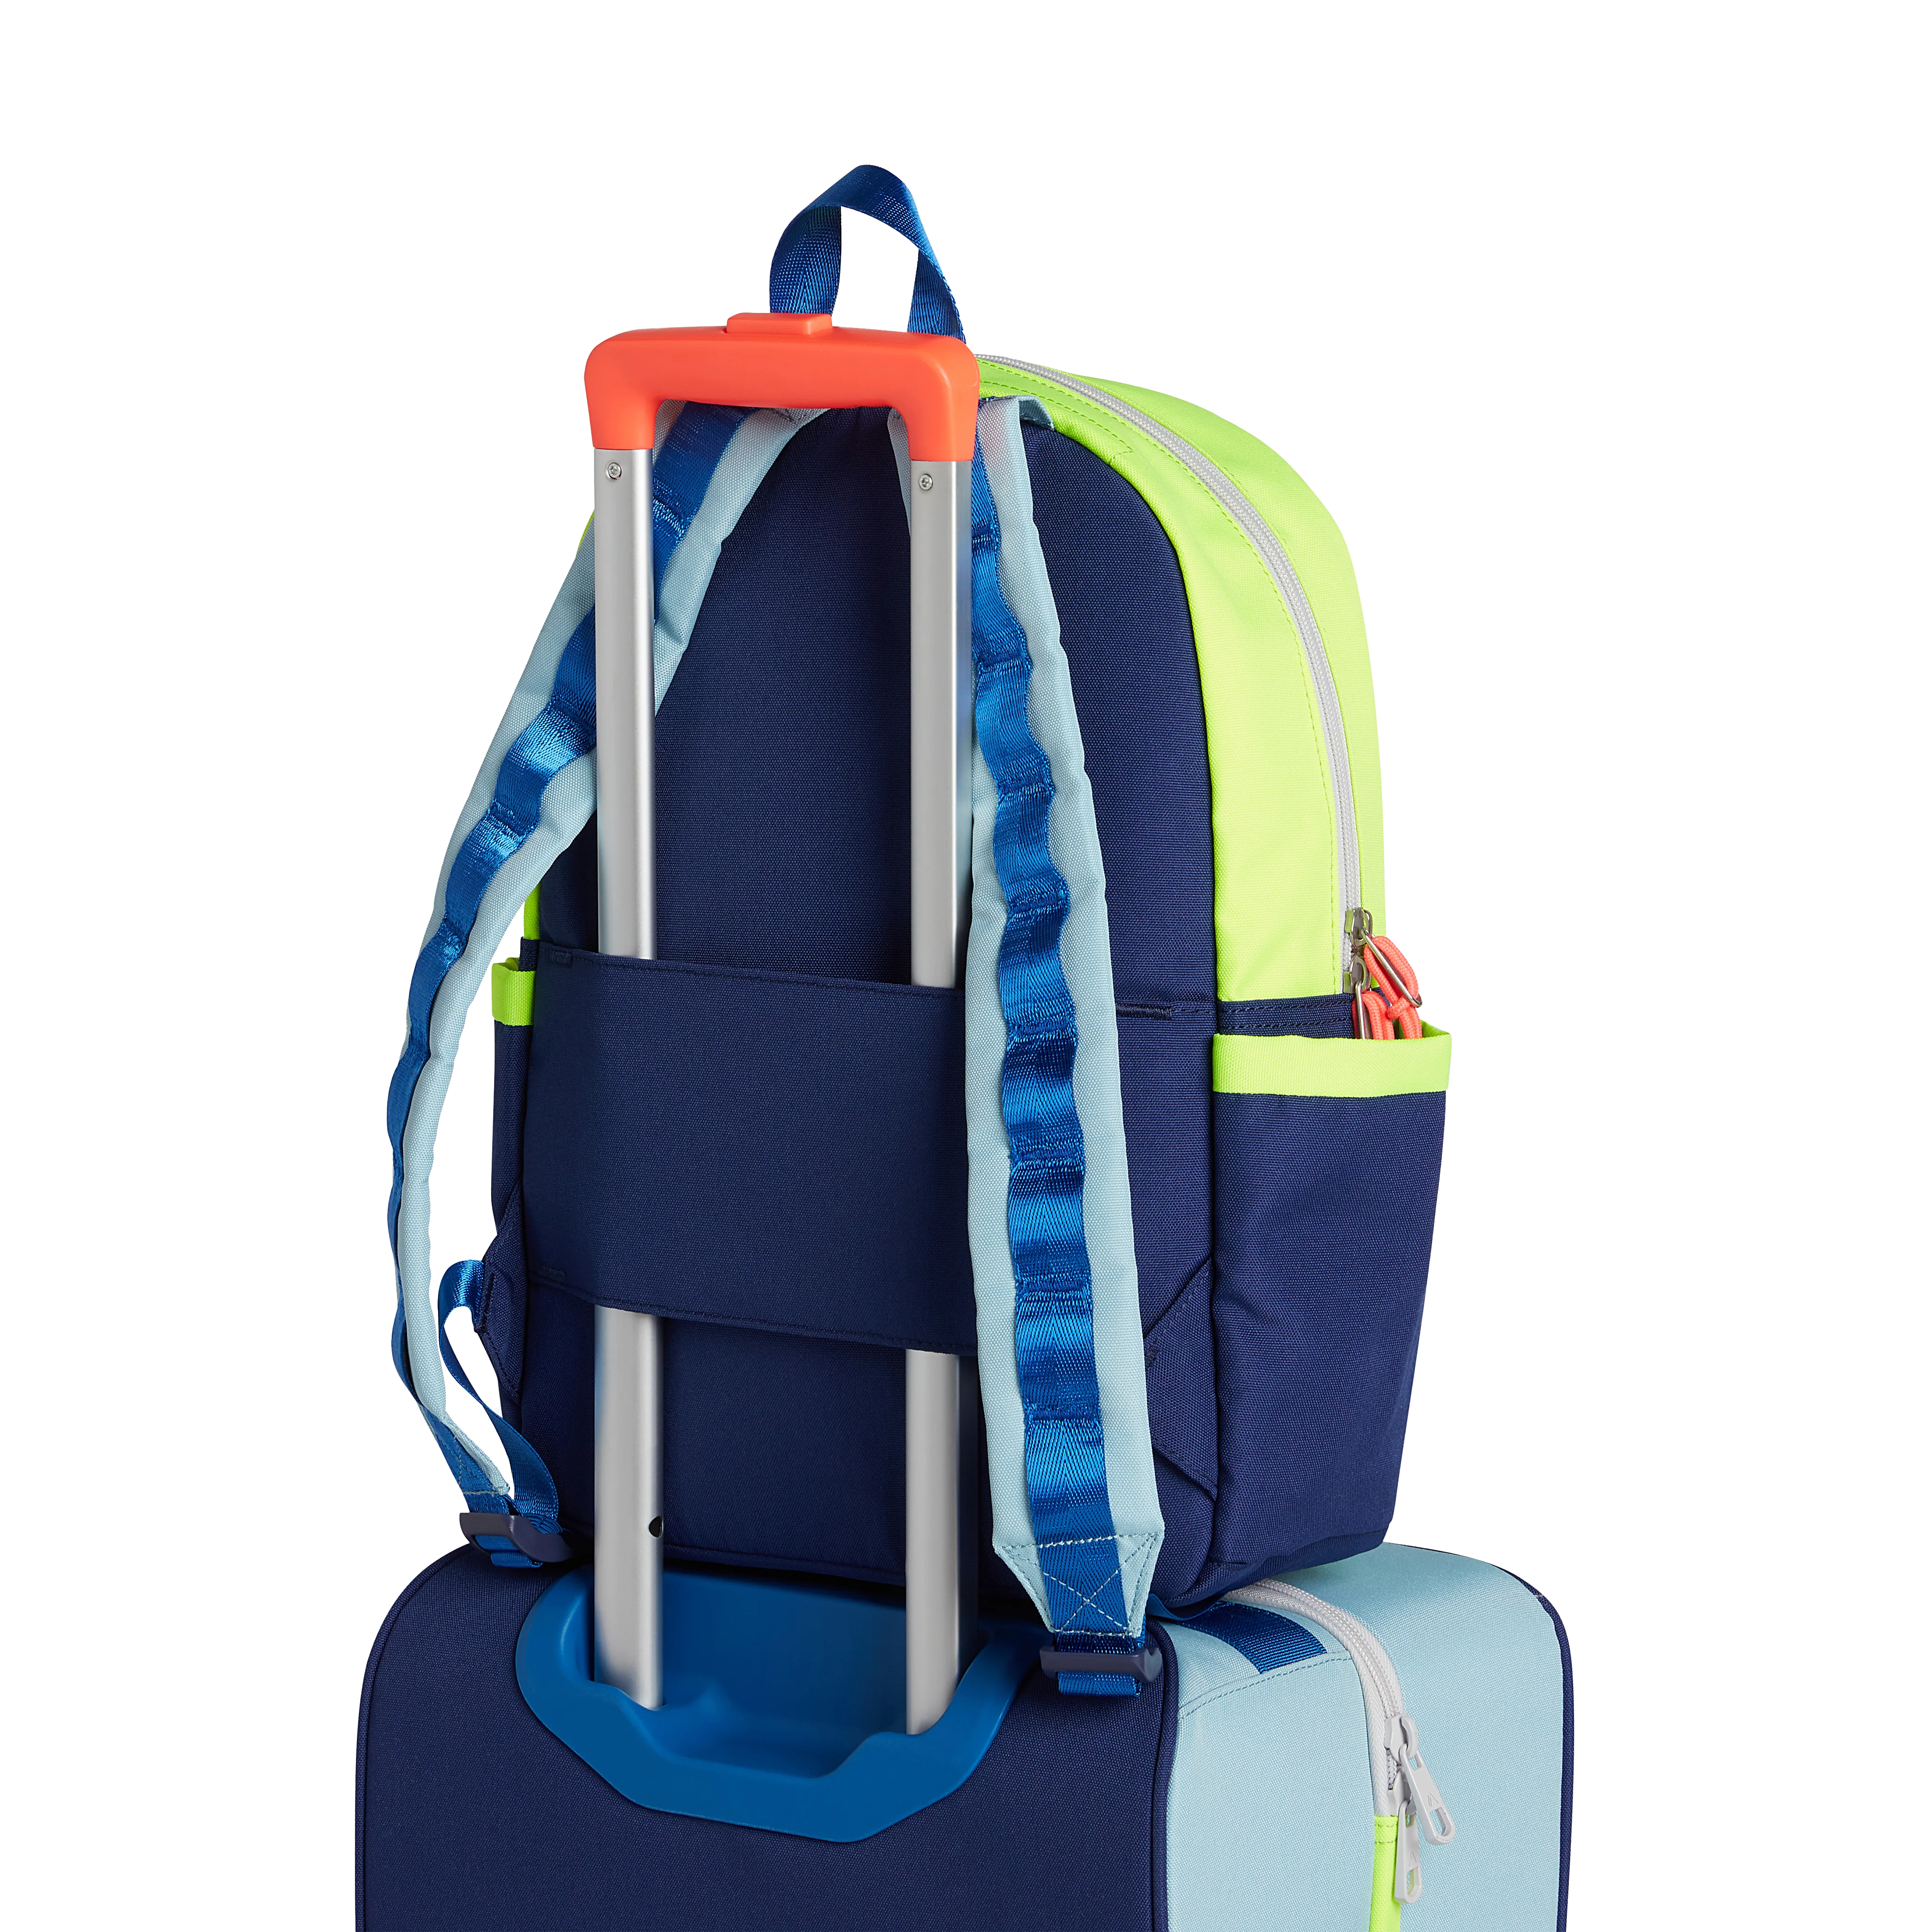 State - Kane Kids Travel backpack